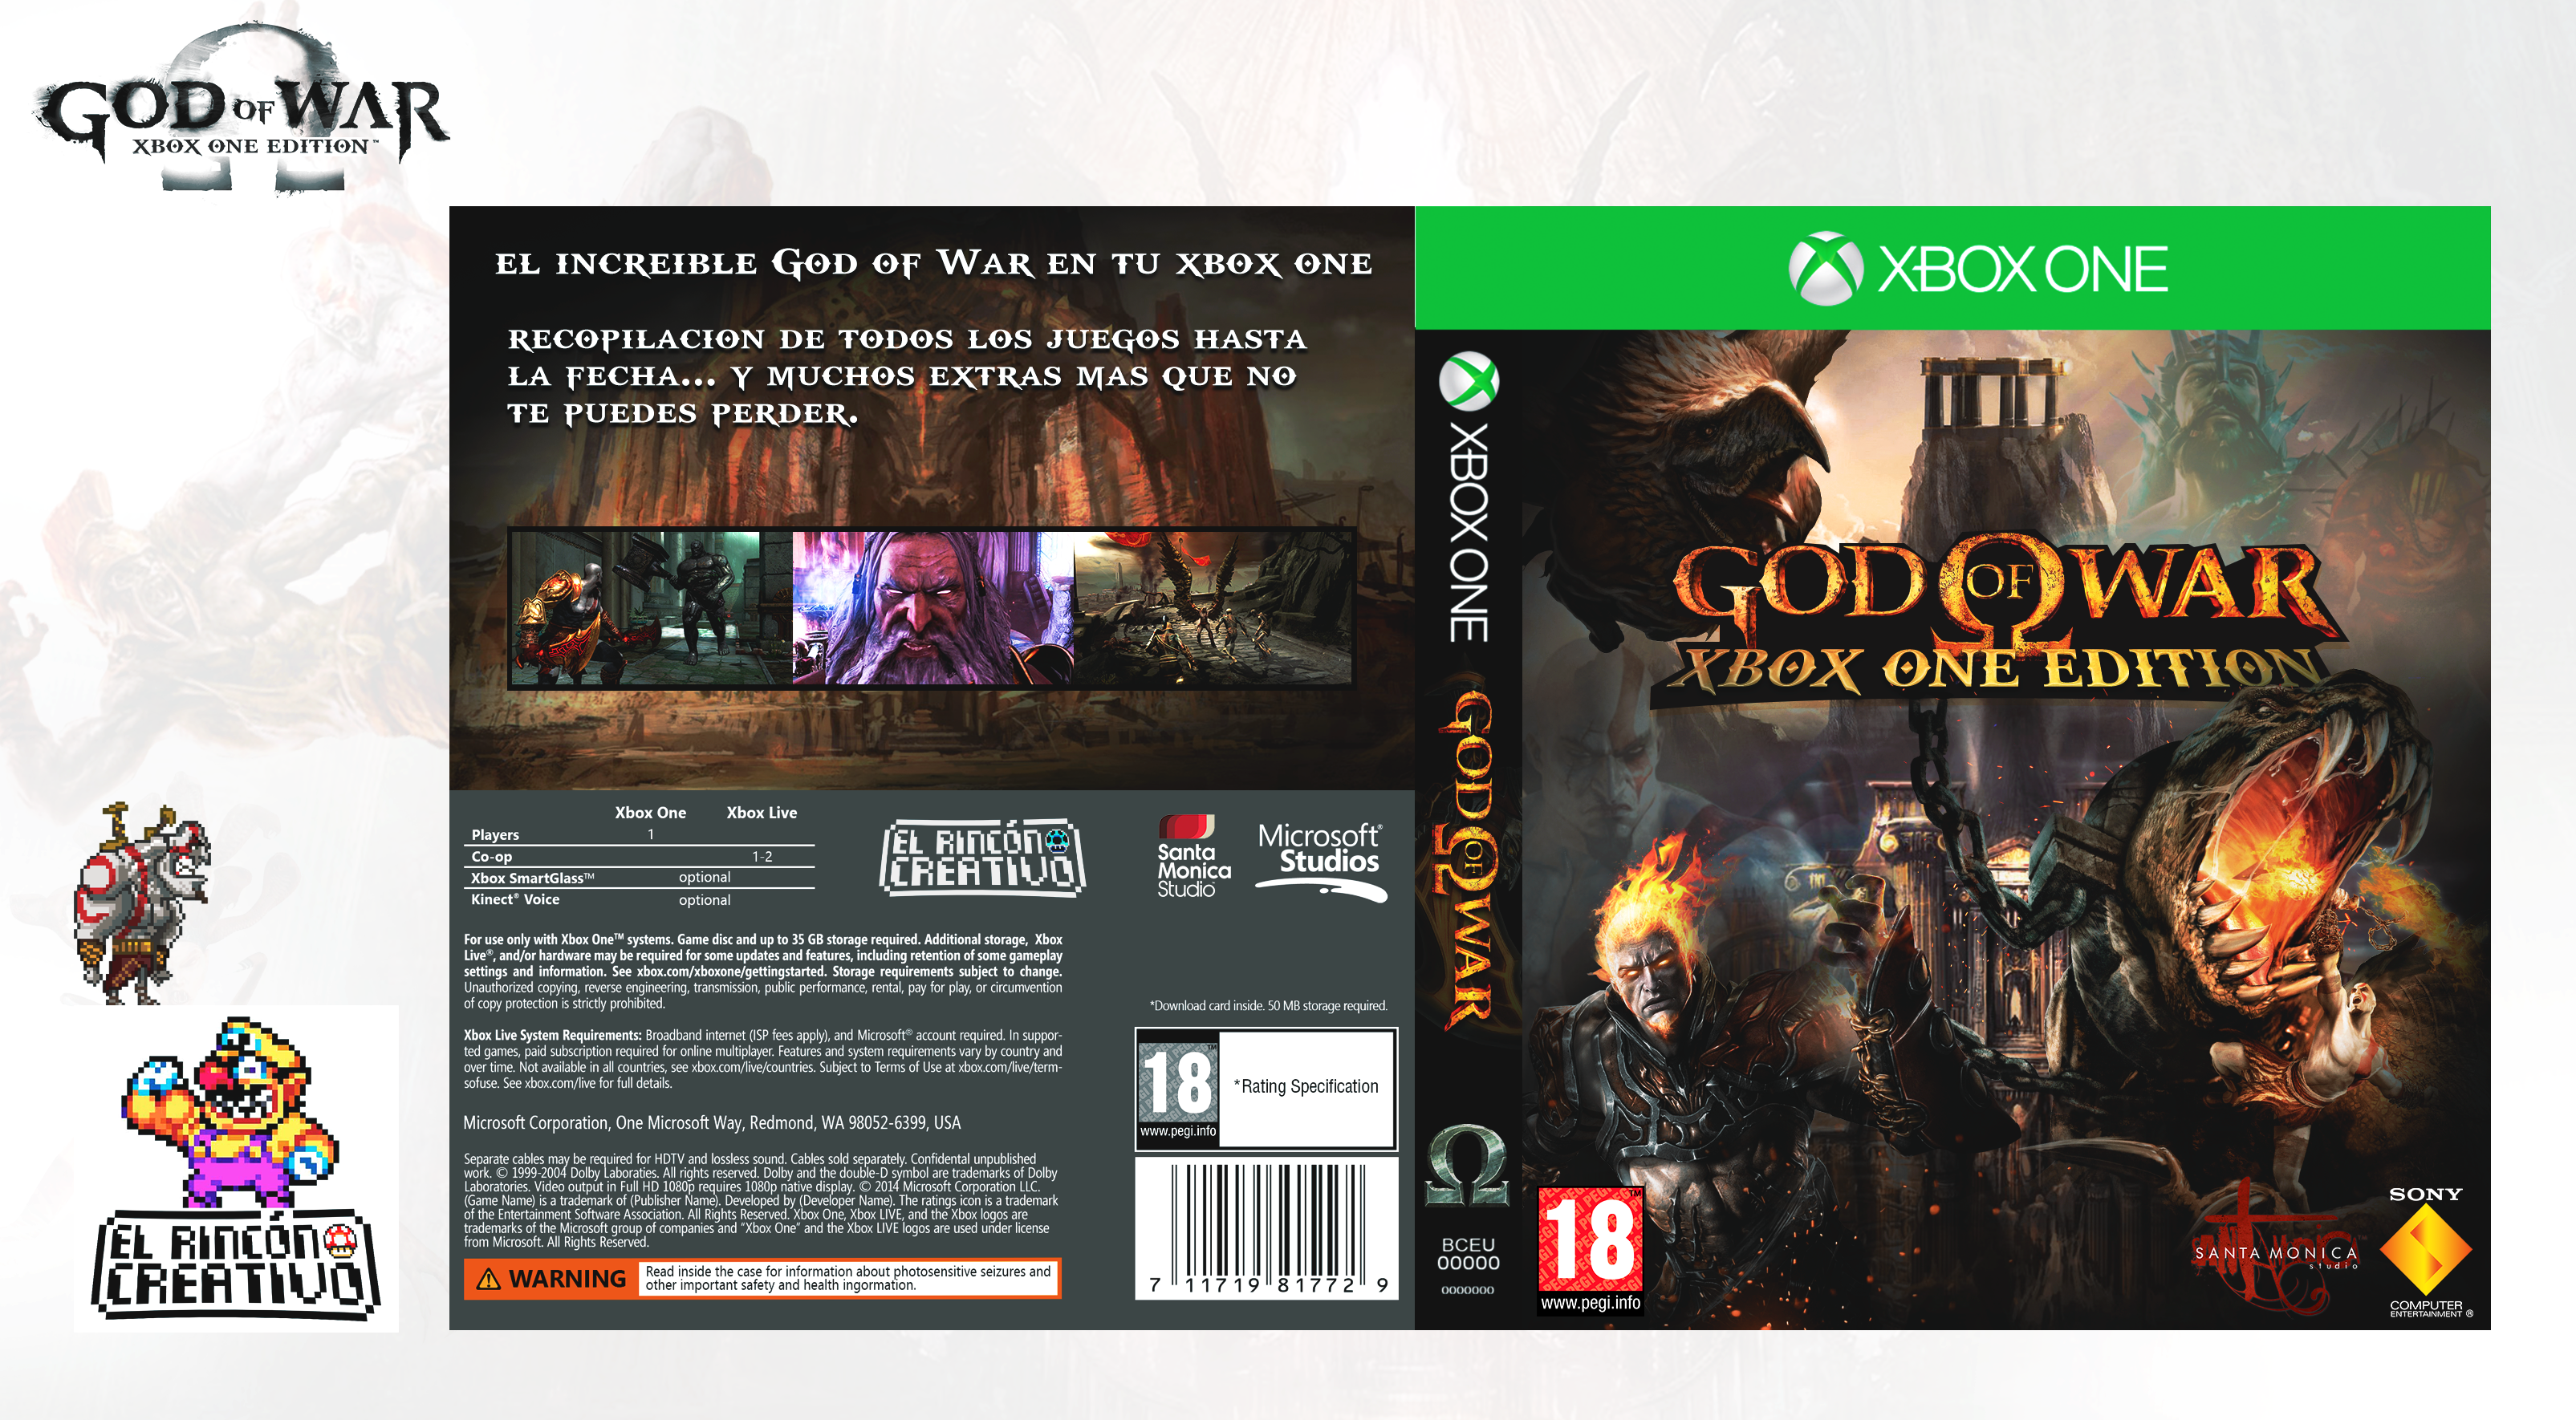 God of War XBOX ONE Edition by ElRinconCreativo on DeviantArt